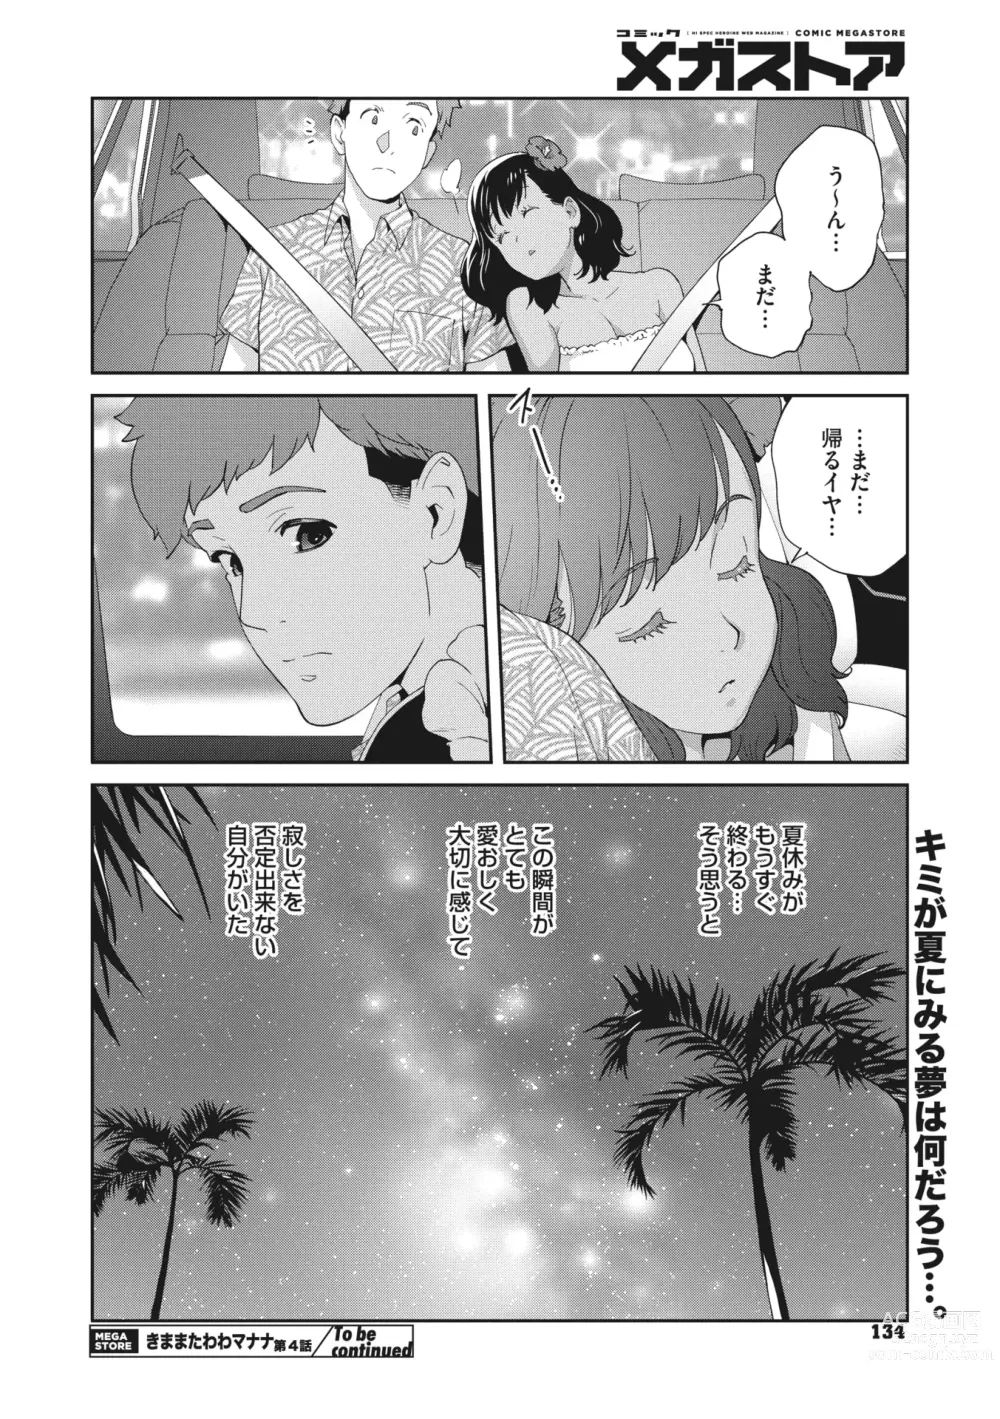 Page 80 of manga Kimama Tawawa Manana 1-4